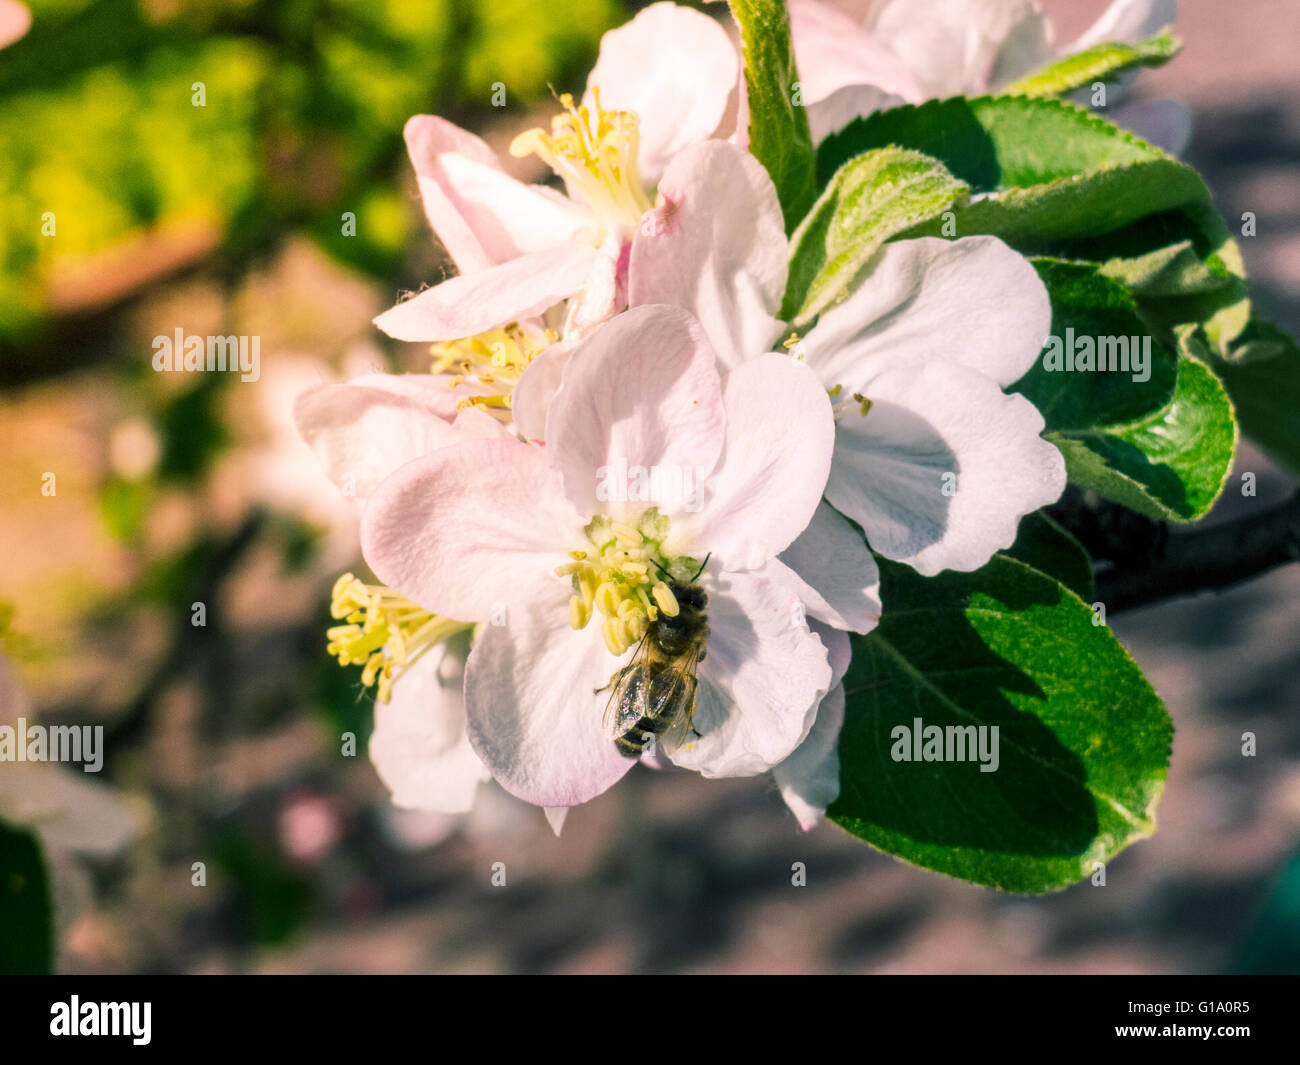 Blühender Apfelbaum im Frühling. Stockfoto